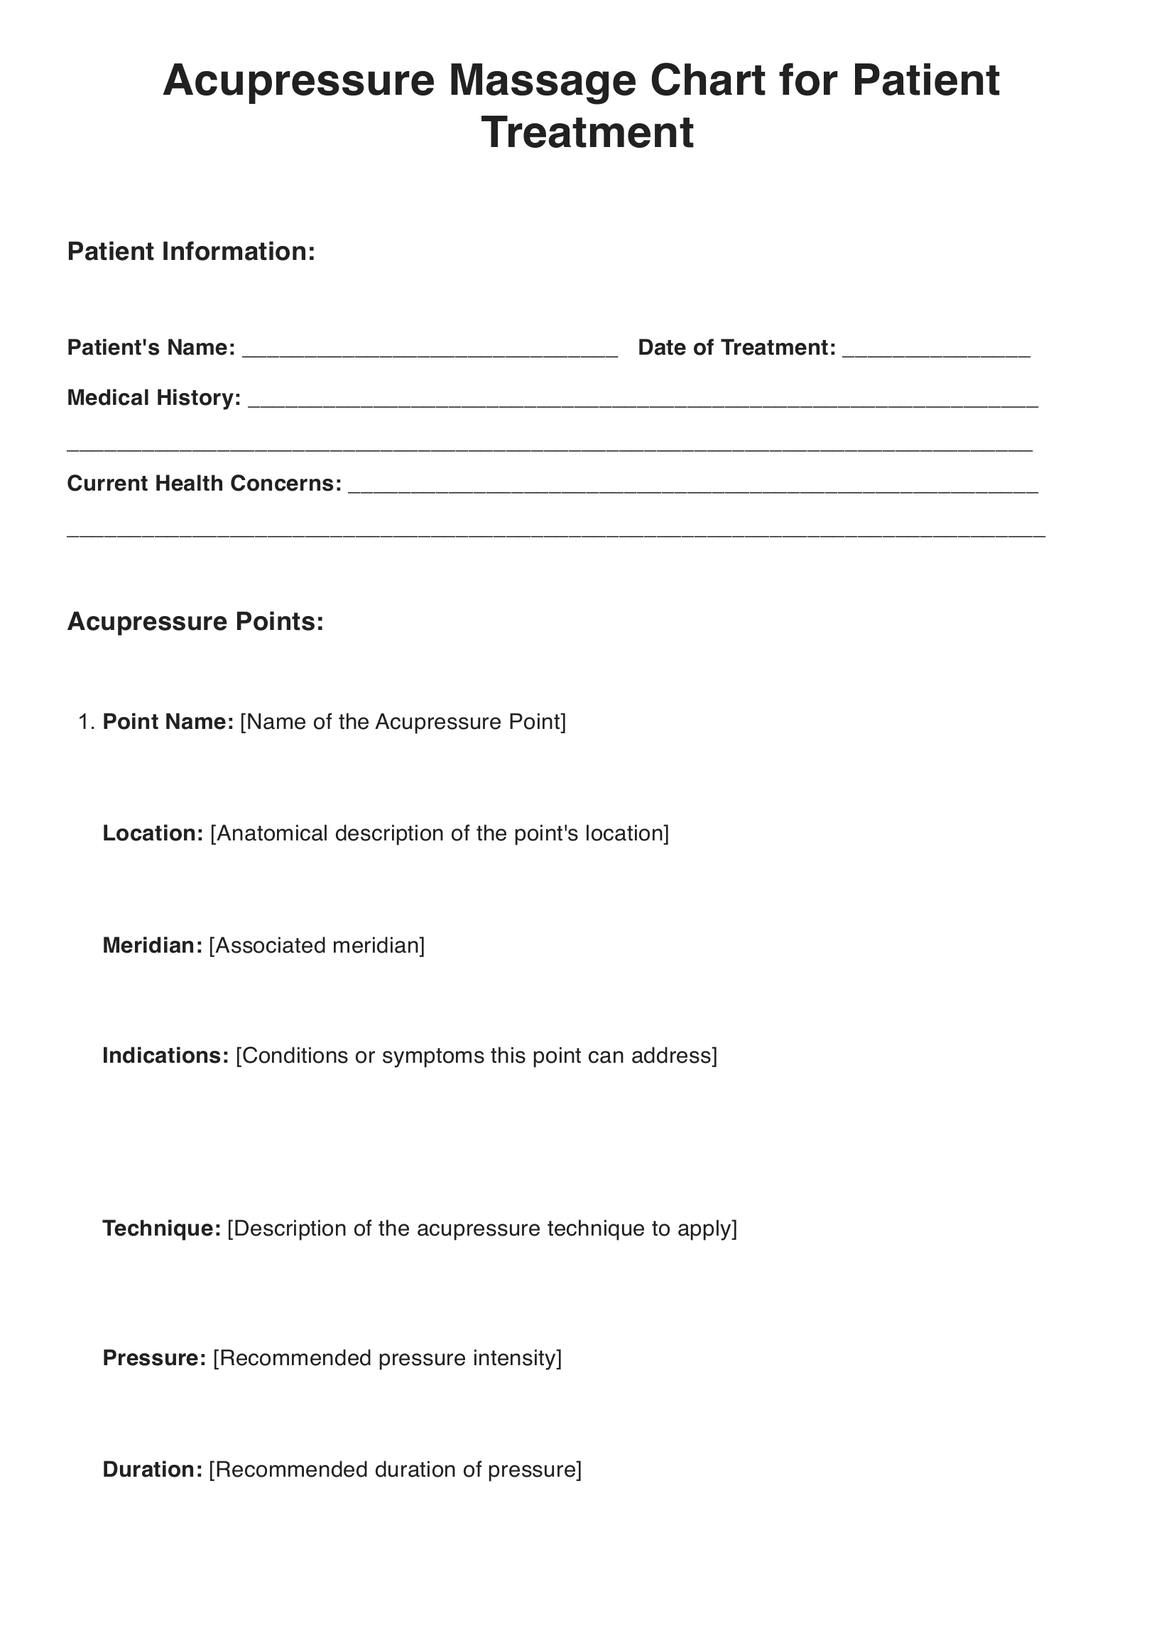 Acupressure Massage Points Charts PDF Example